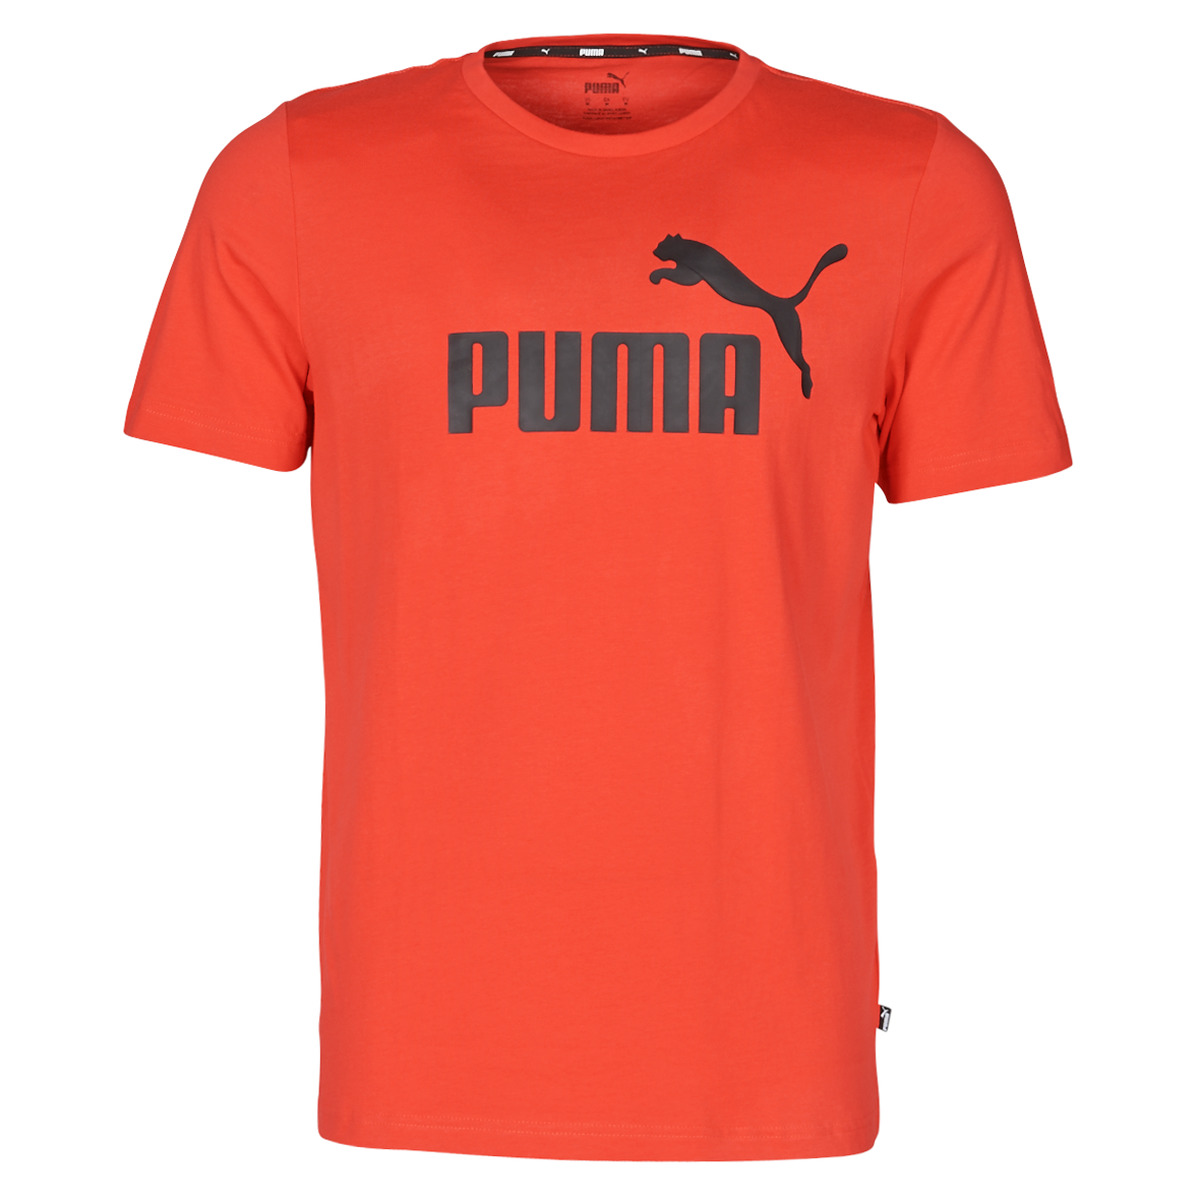 Textil Muži Trička s krátkým rukávem Puma ESSENTIAL TEE Červená